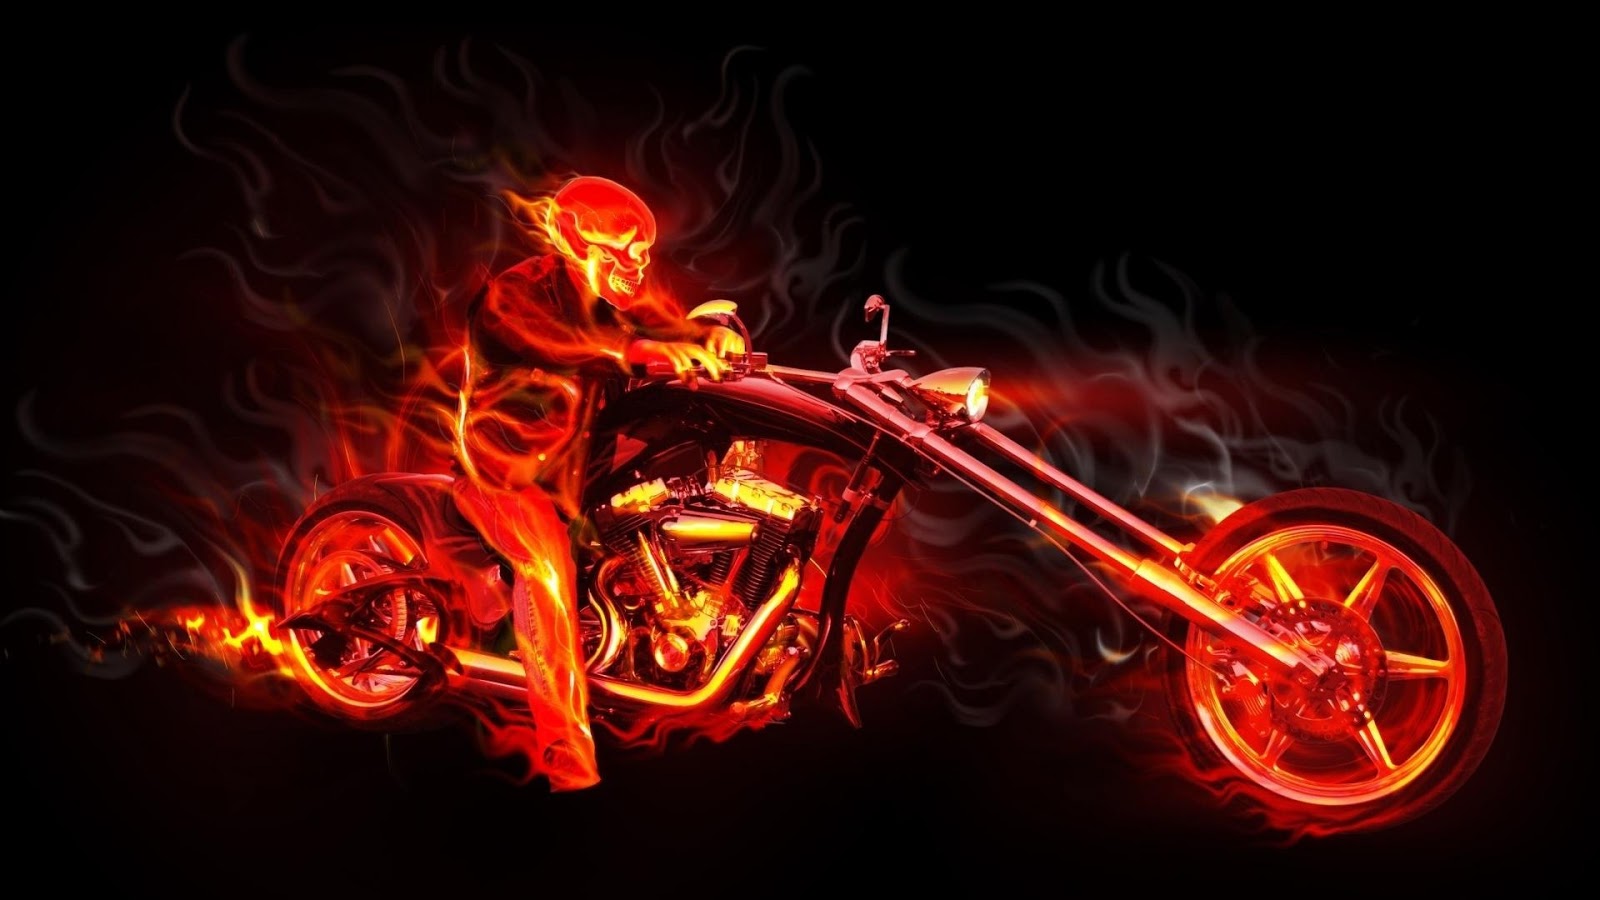 Motorcycle Skull Flames Fantasy Wallpaper HD